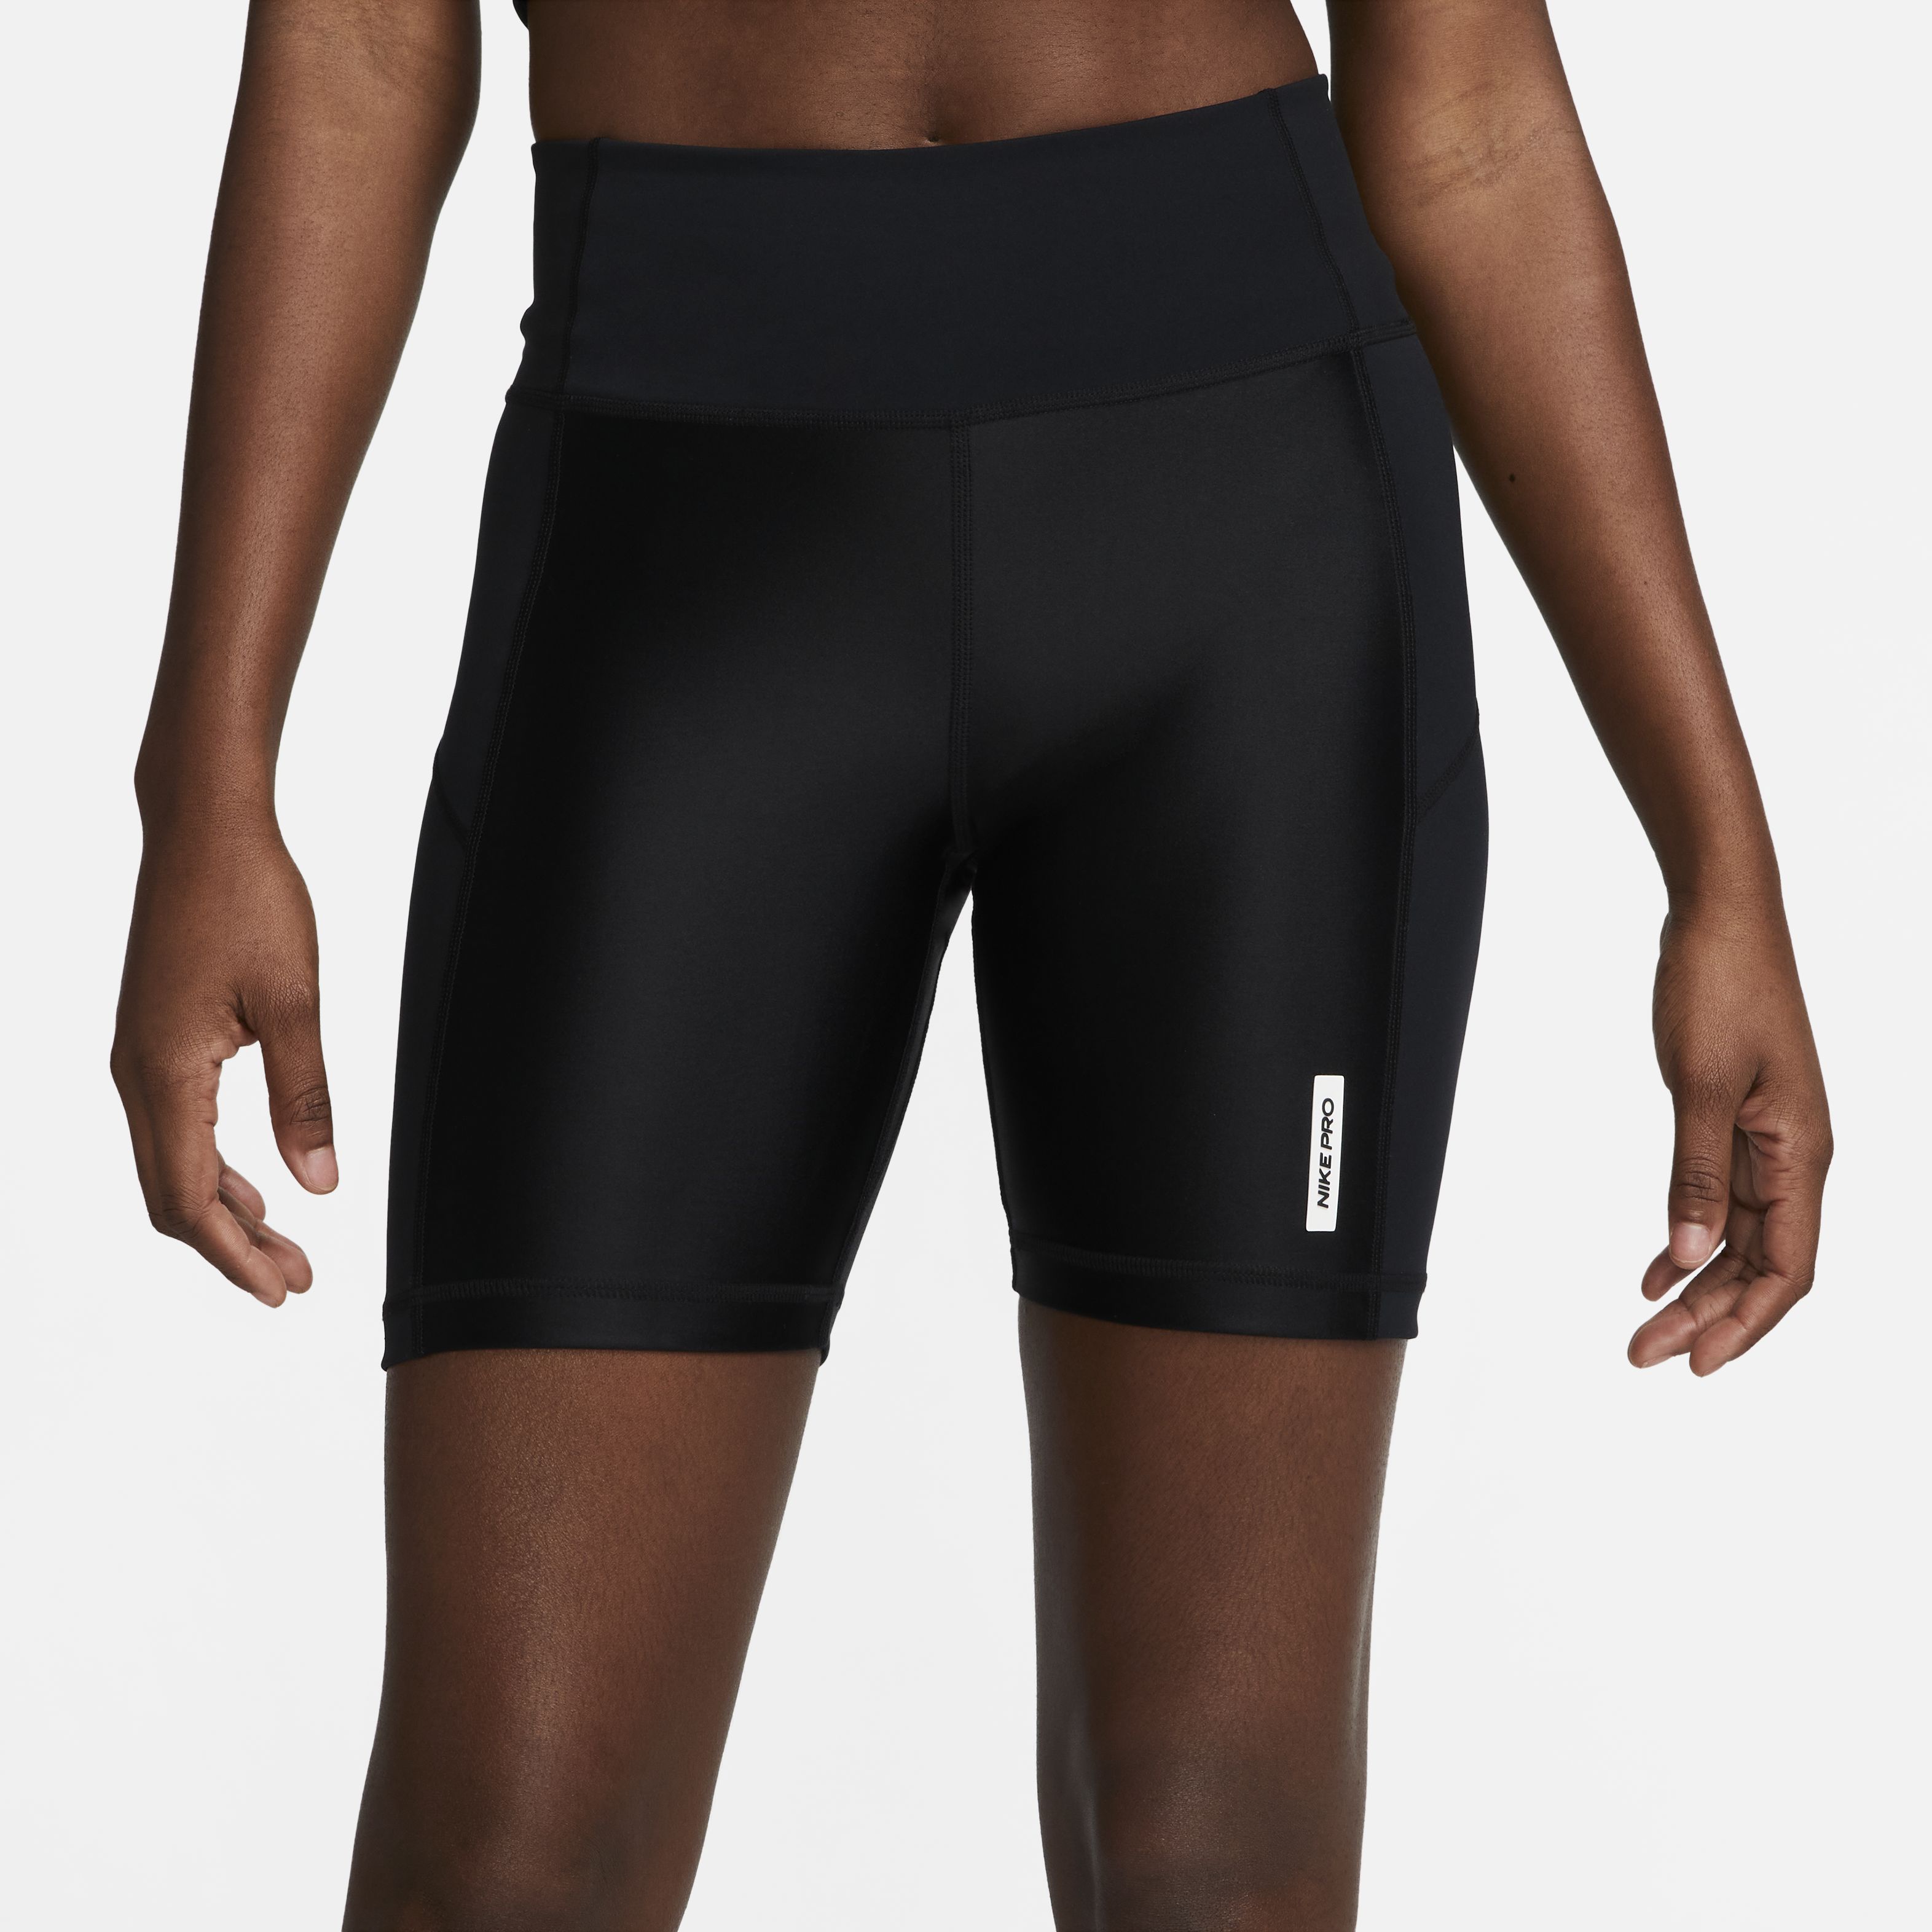 Nike Pro, Negro/Blanco, hi-res